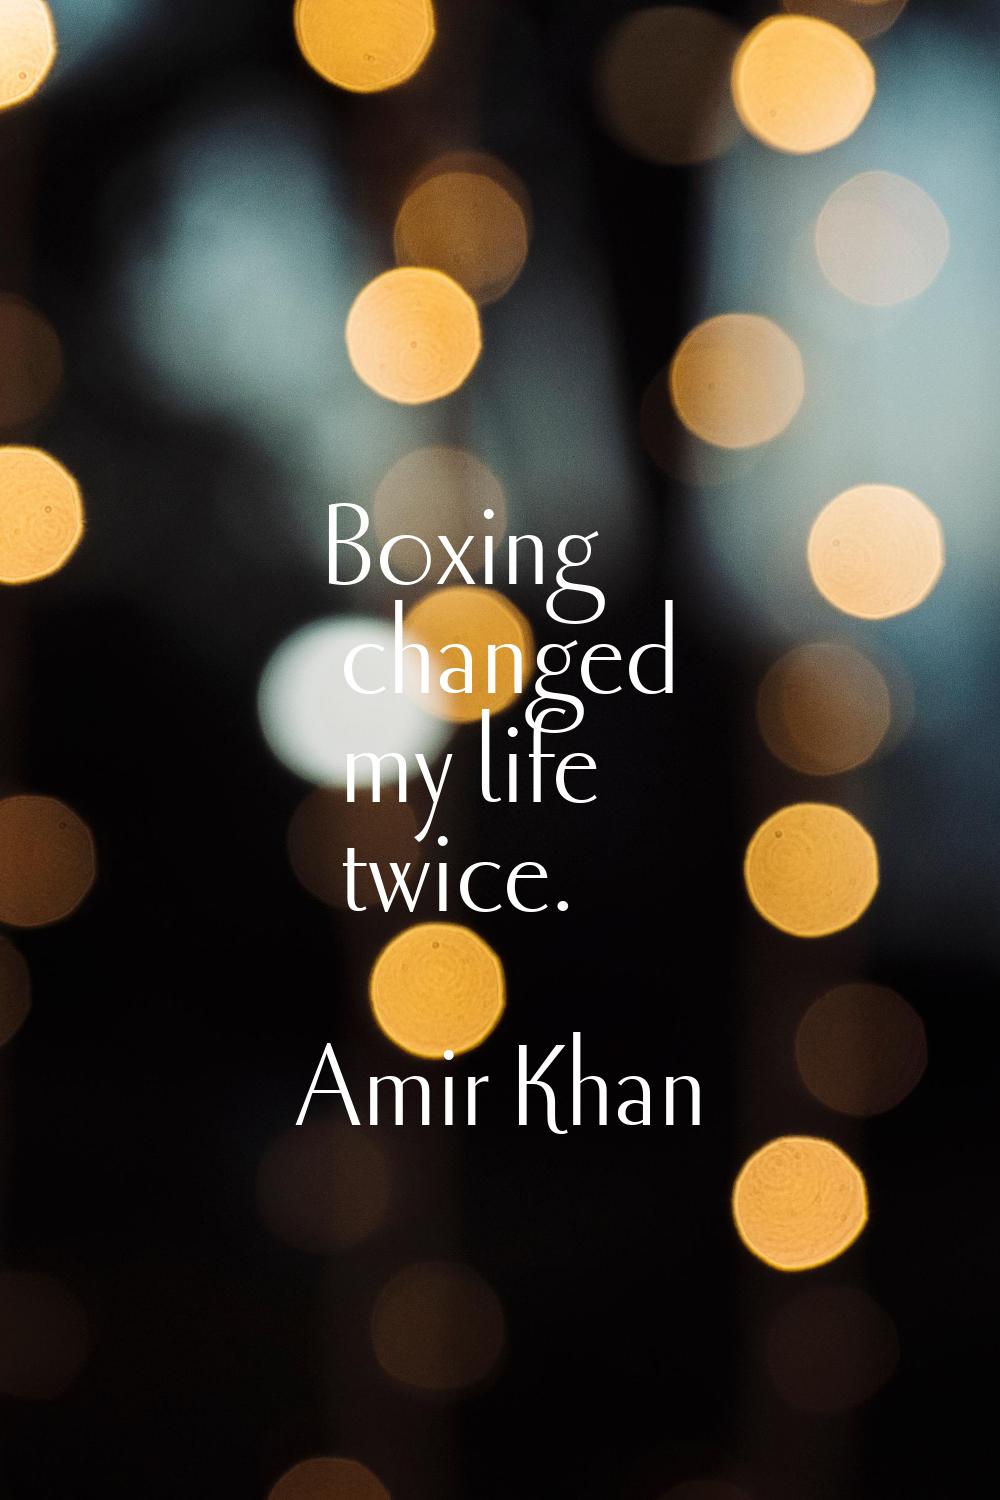 Boxing changed my life twice.